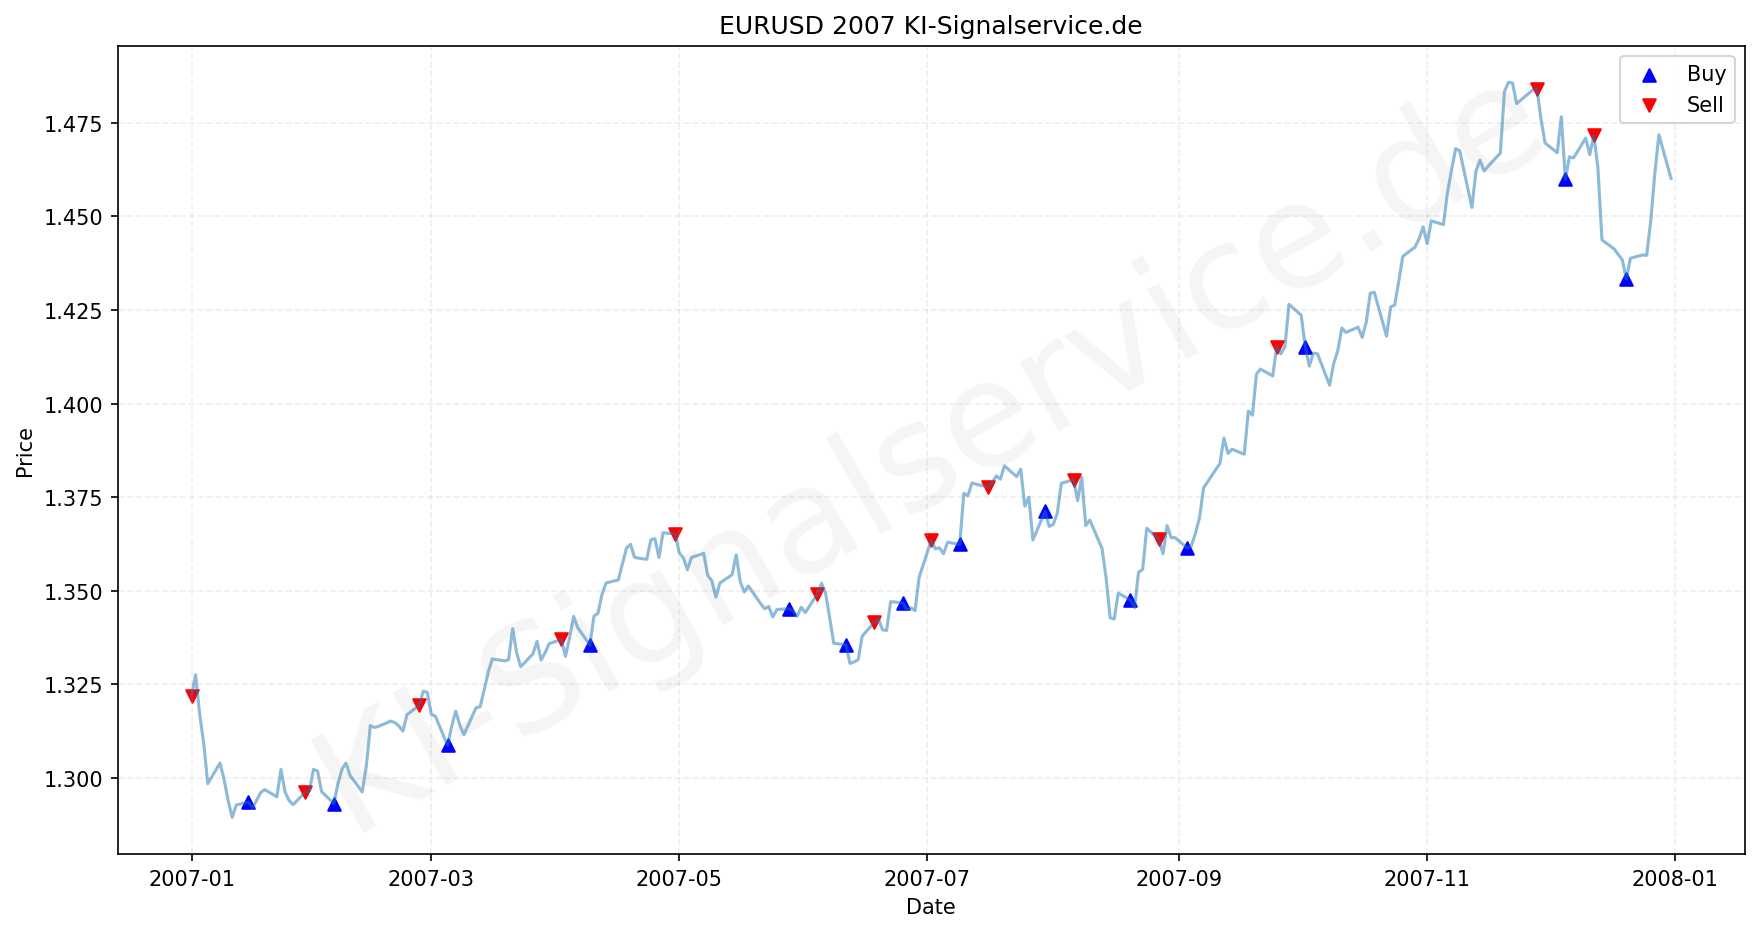 EURUSD Chart - KI Tradingsignale 2007